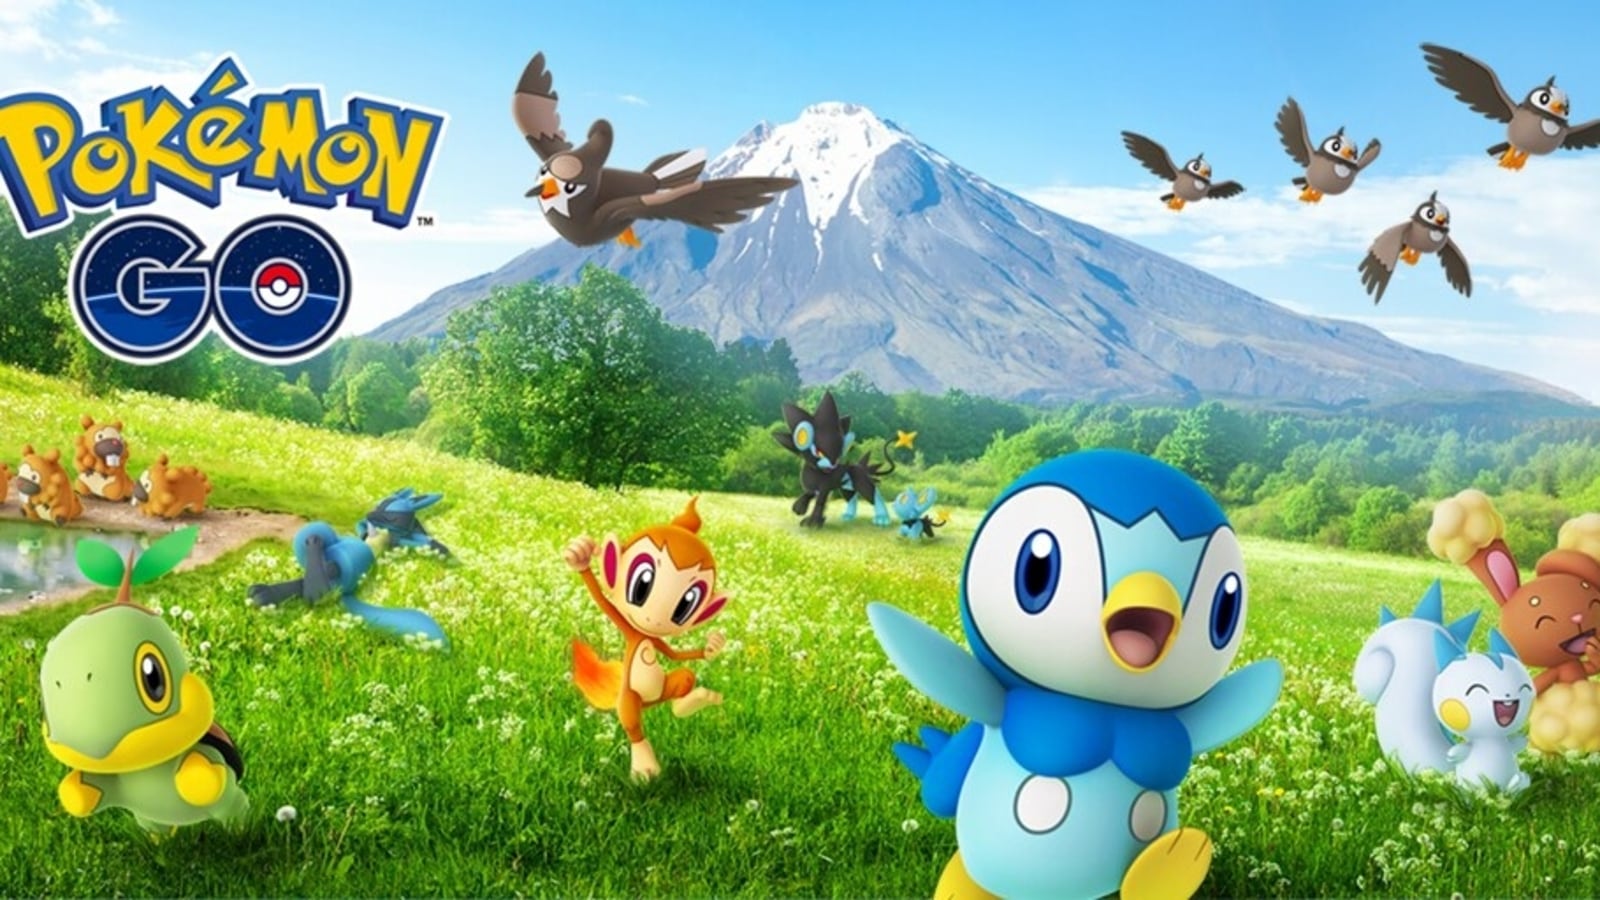 Even more new Mega Pokémon evolutions coming